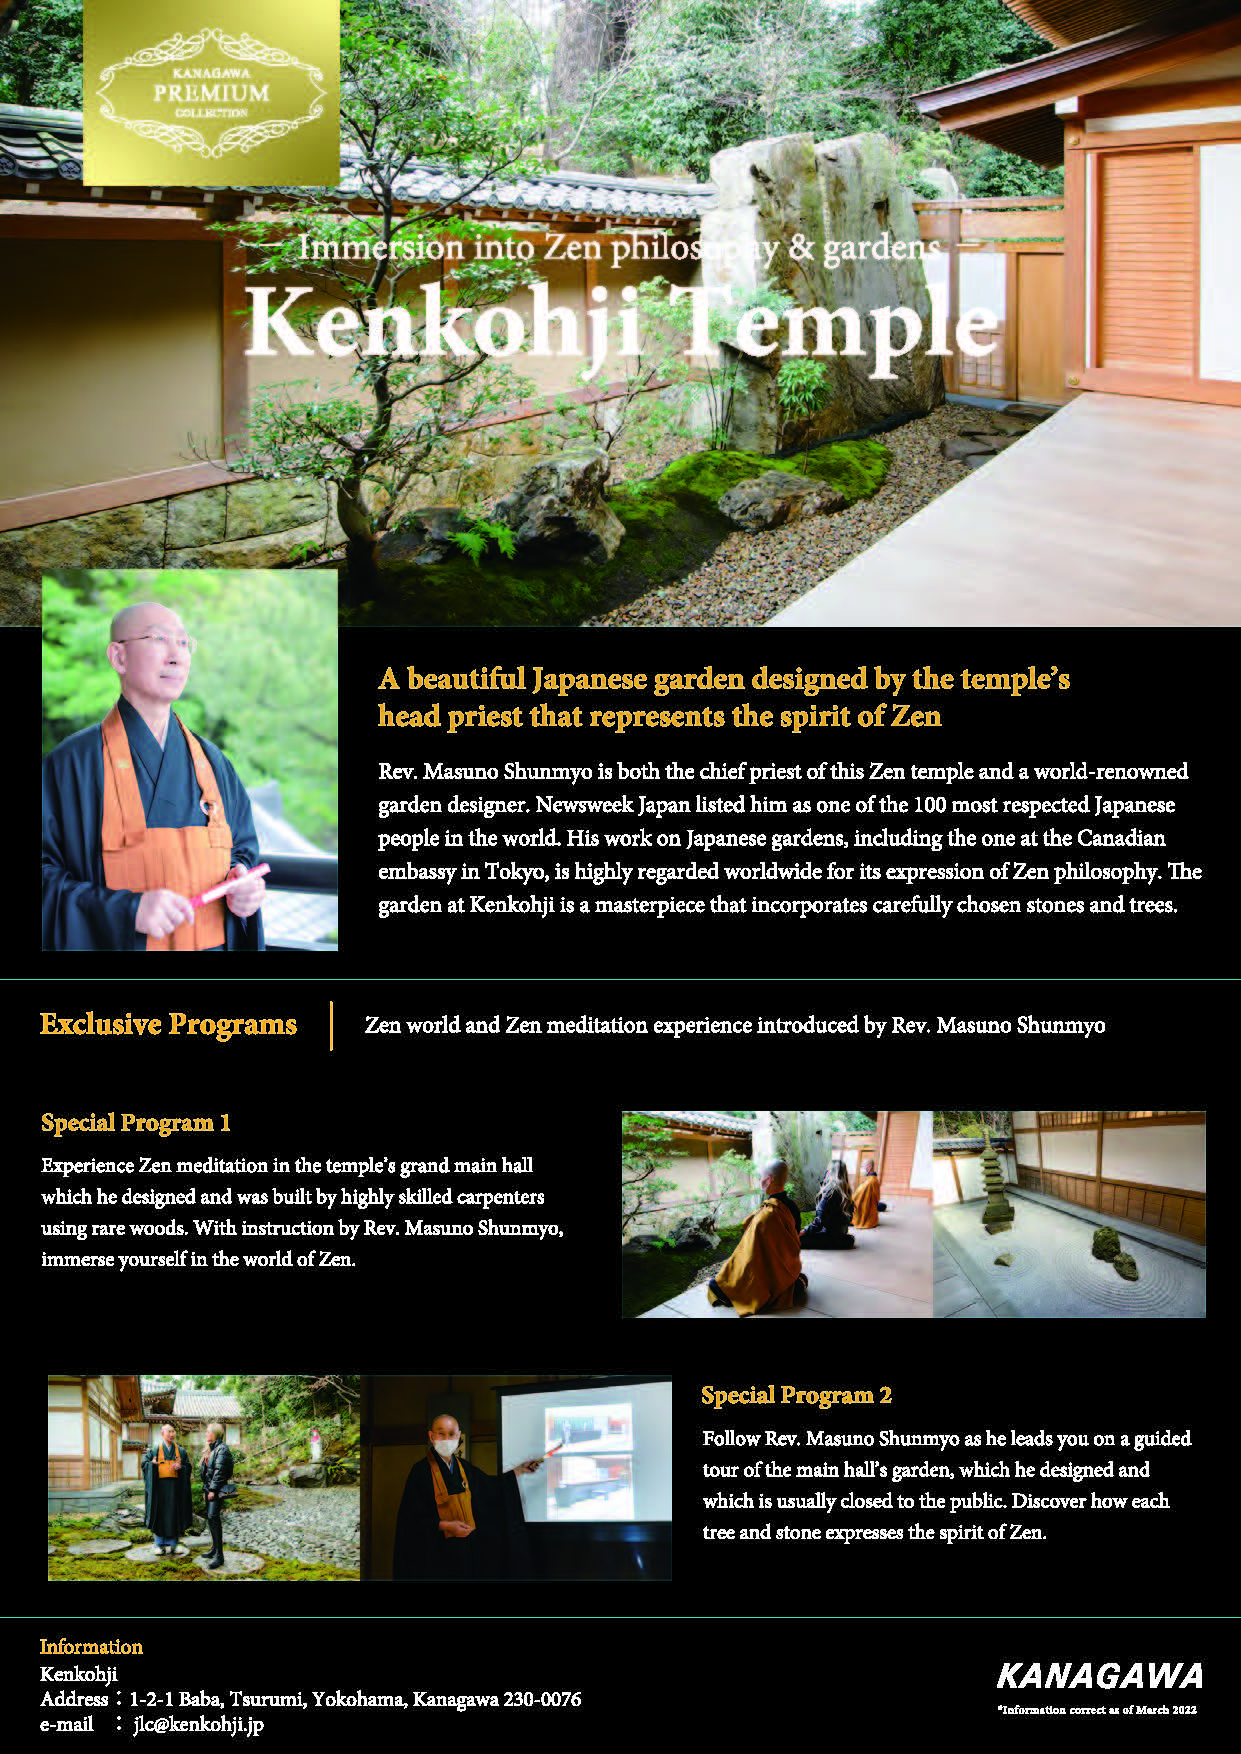 Kenkohji Temple